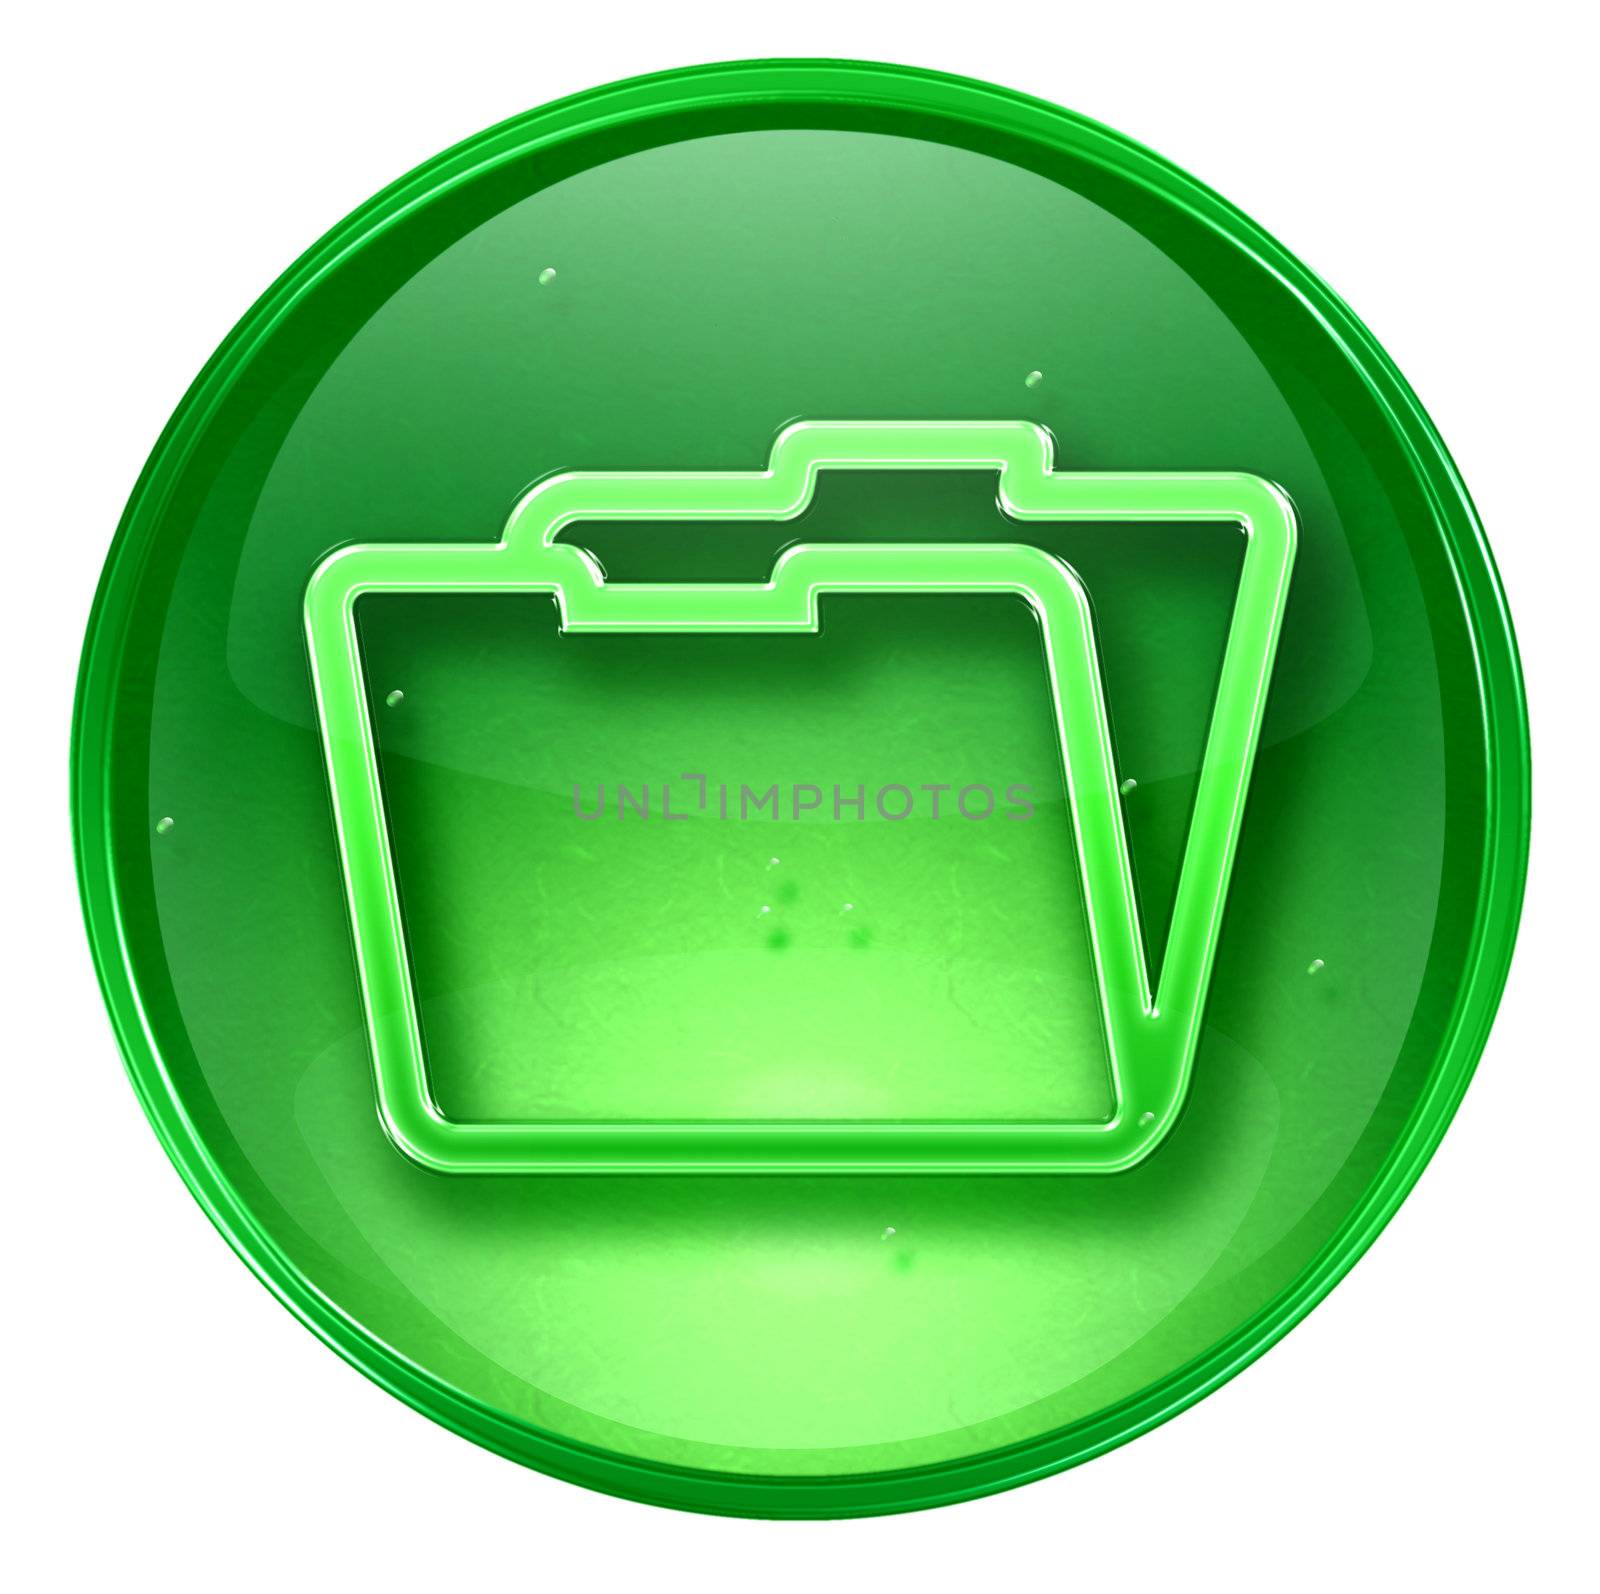  Folder icon green, isolated on white background